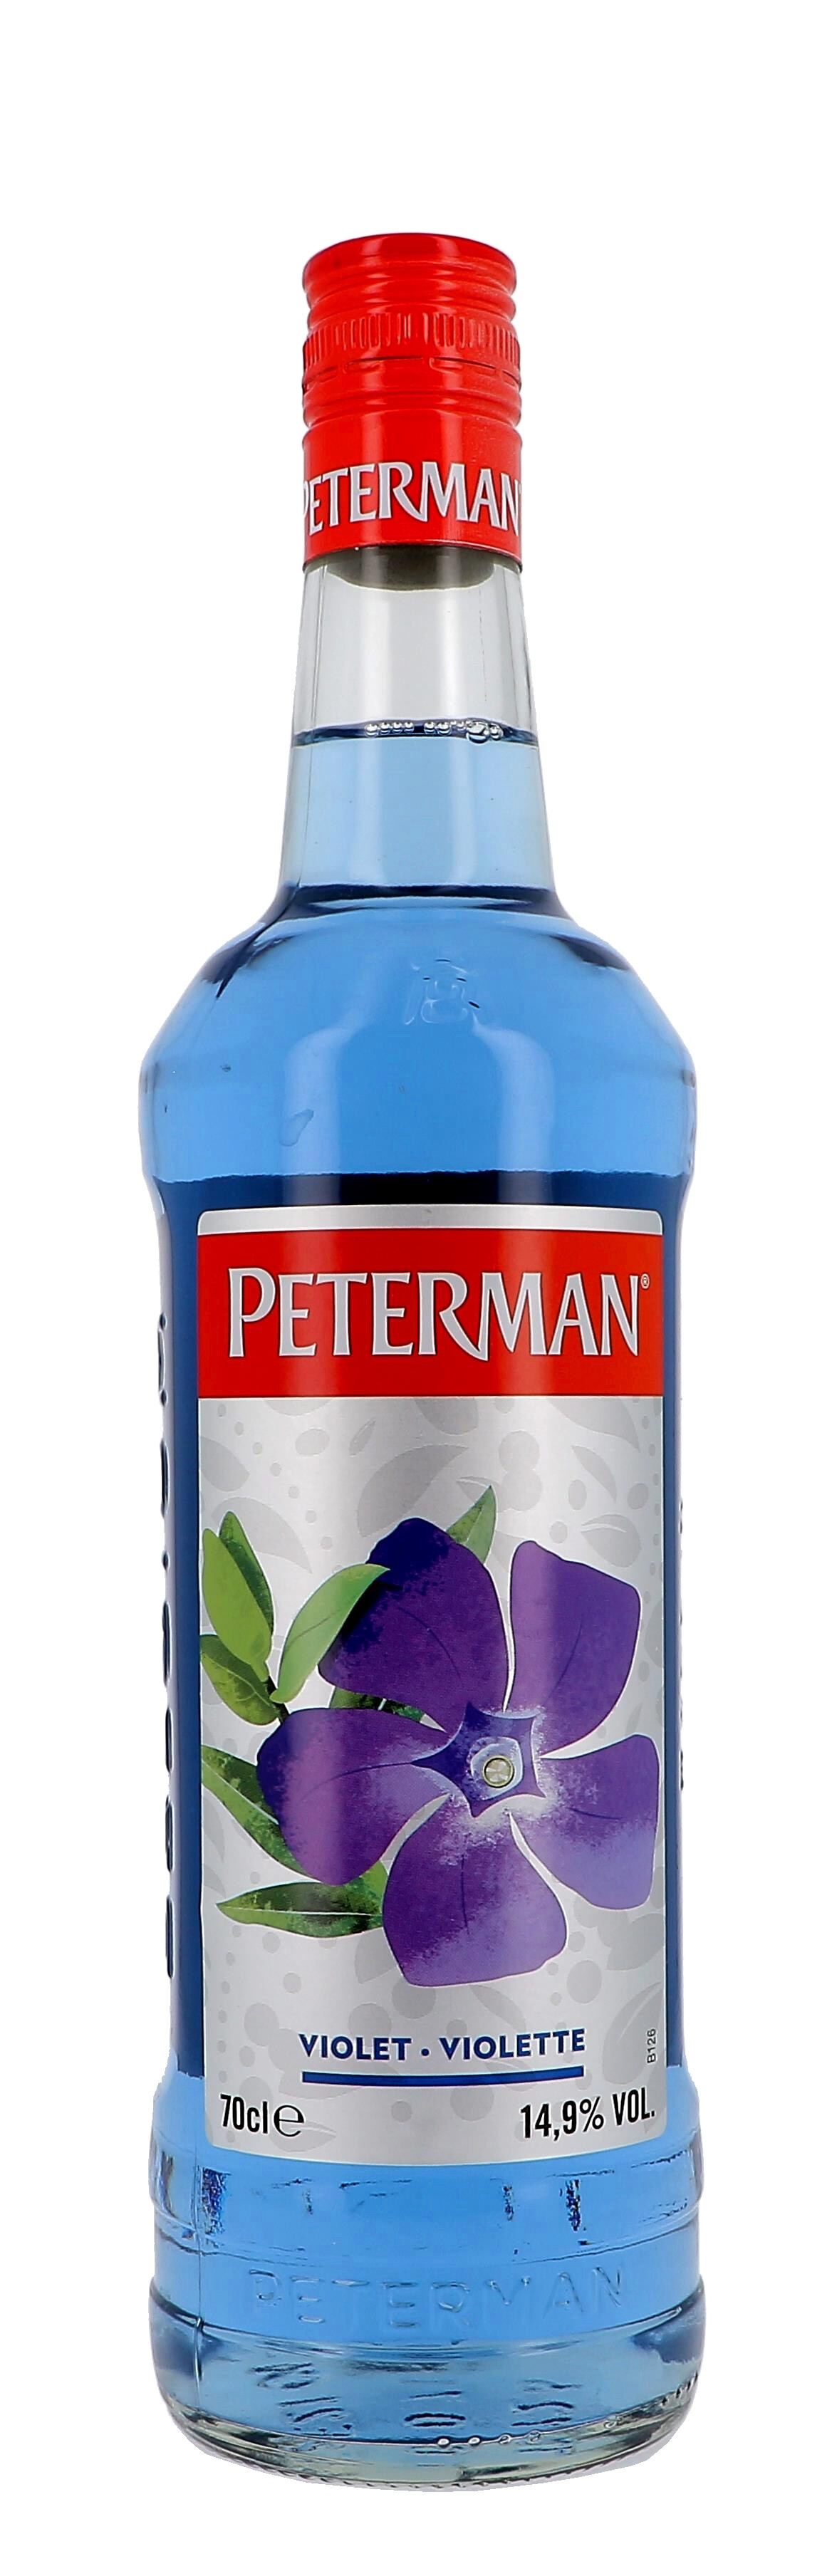 Peterman Violet Jenever Likeur 70cl 14.9%